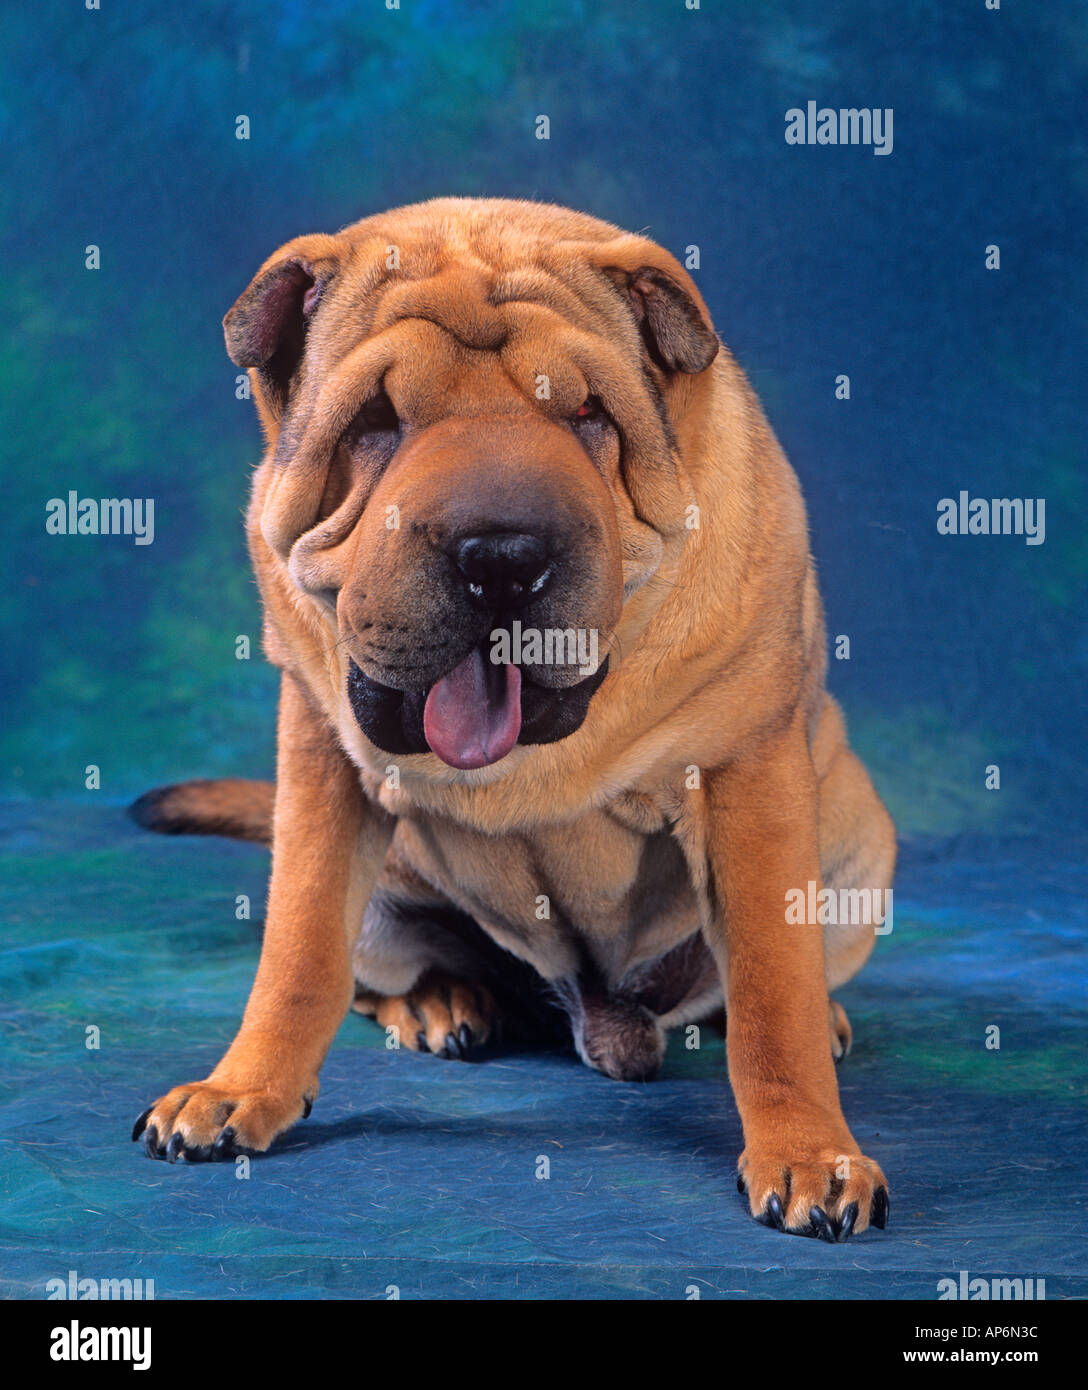 The Shar Pei dog portrait Stock Photo